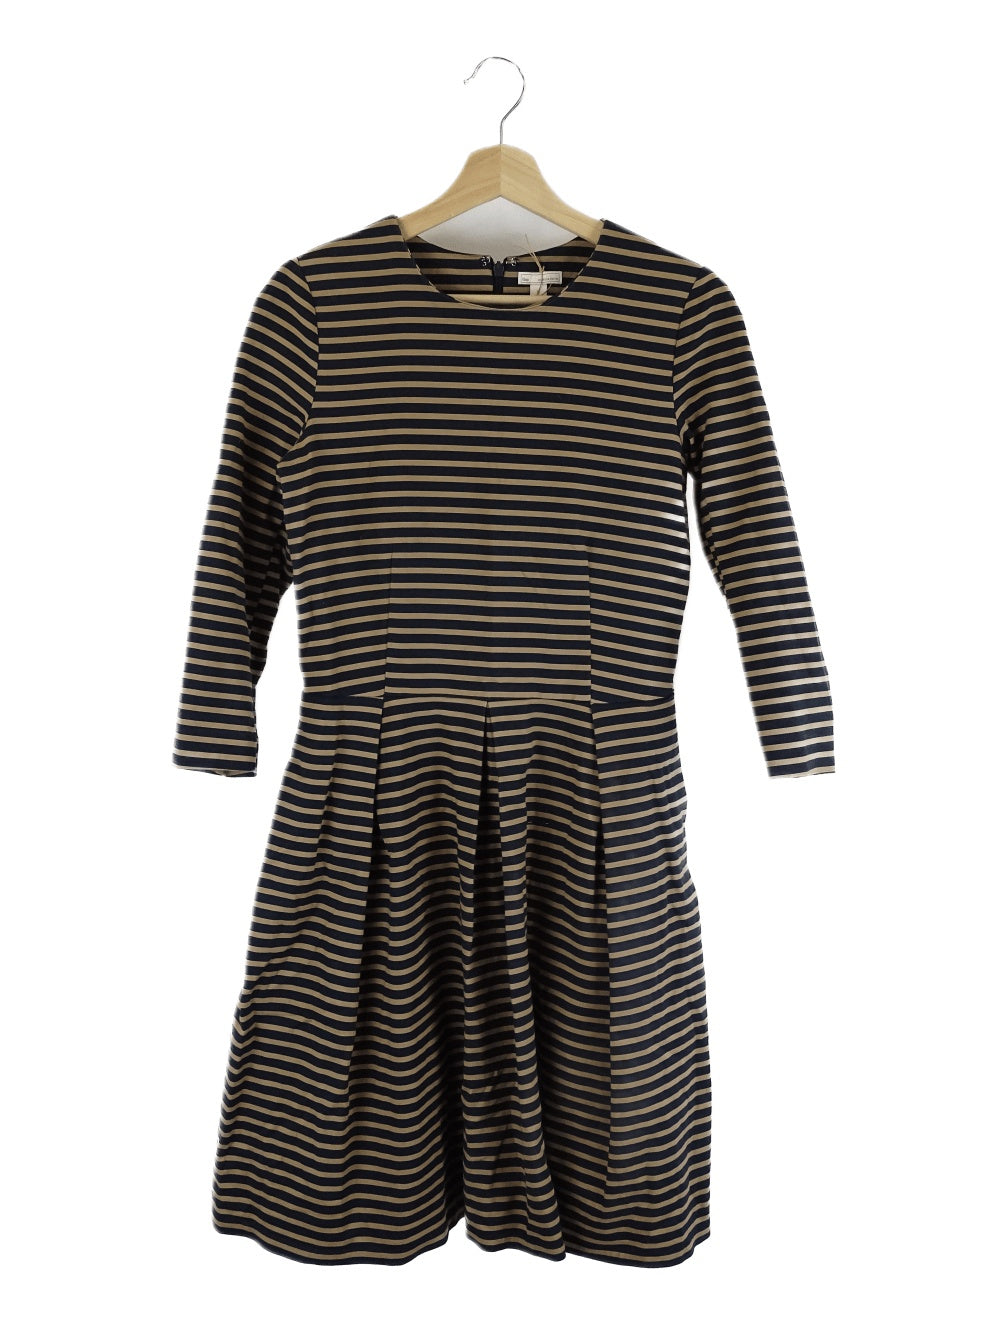 Gap Brown And Black Stripe Dress 6